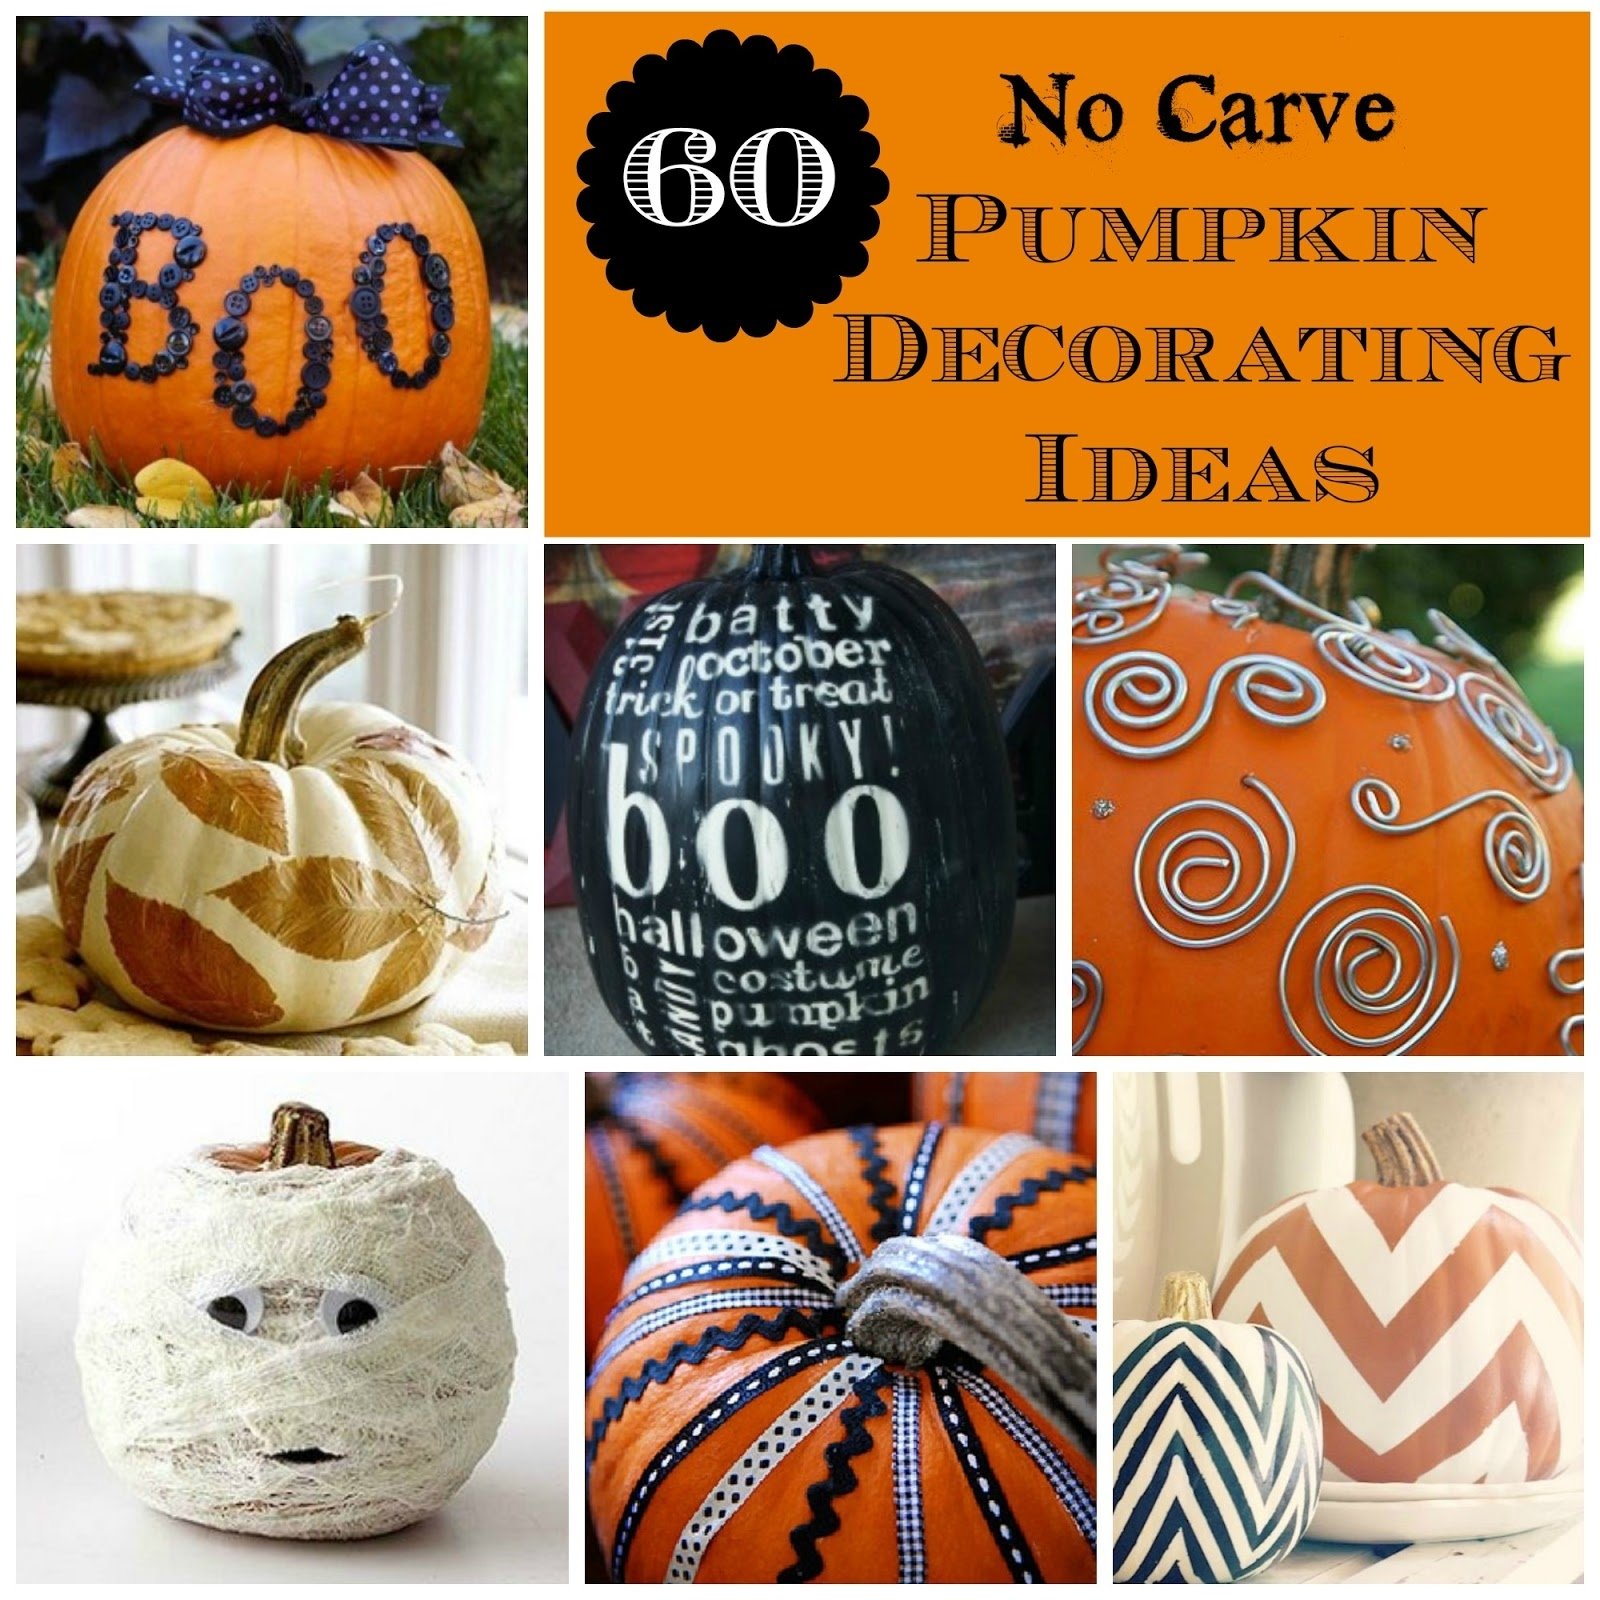 10 Wonderful No Carving Pumpkin Decorating Ideas all things katie marie 60 no carve pumpkin decorating ideas 3 2022